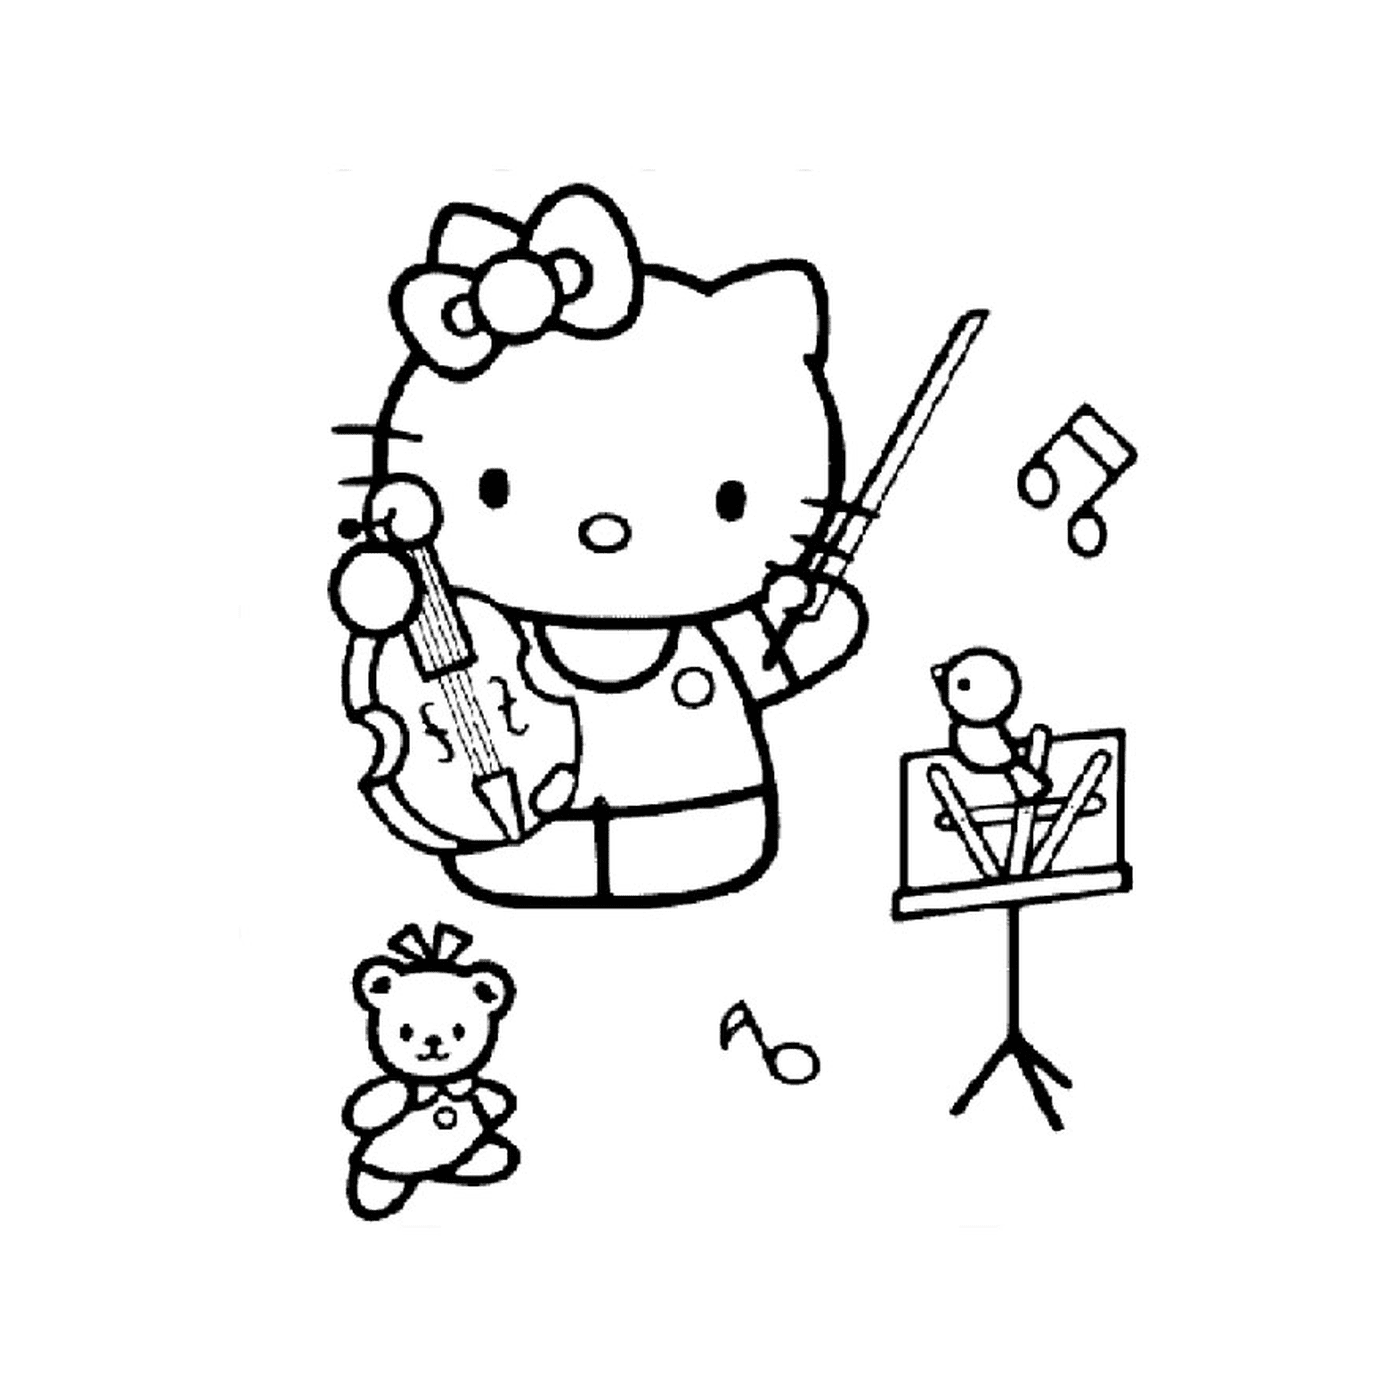  Hallo Kitty spielt ein Musikinstrument 